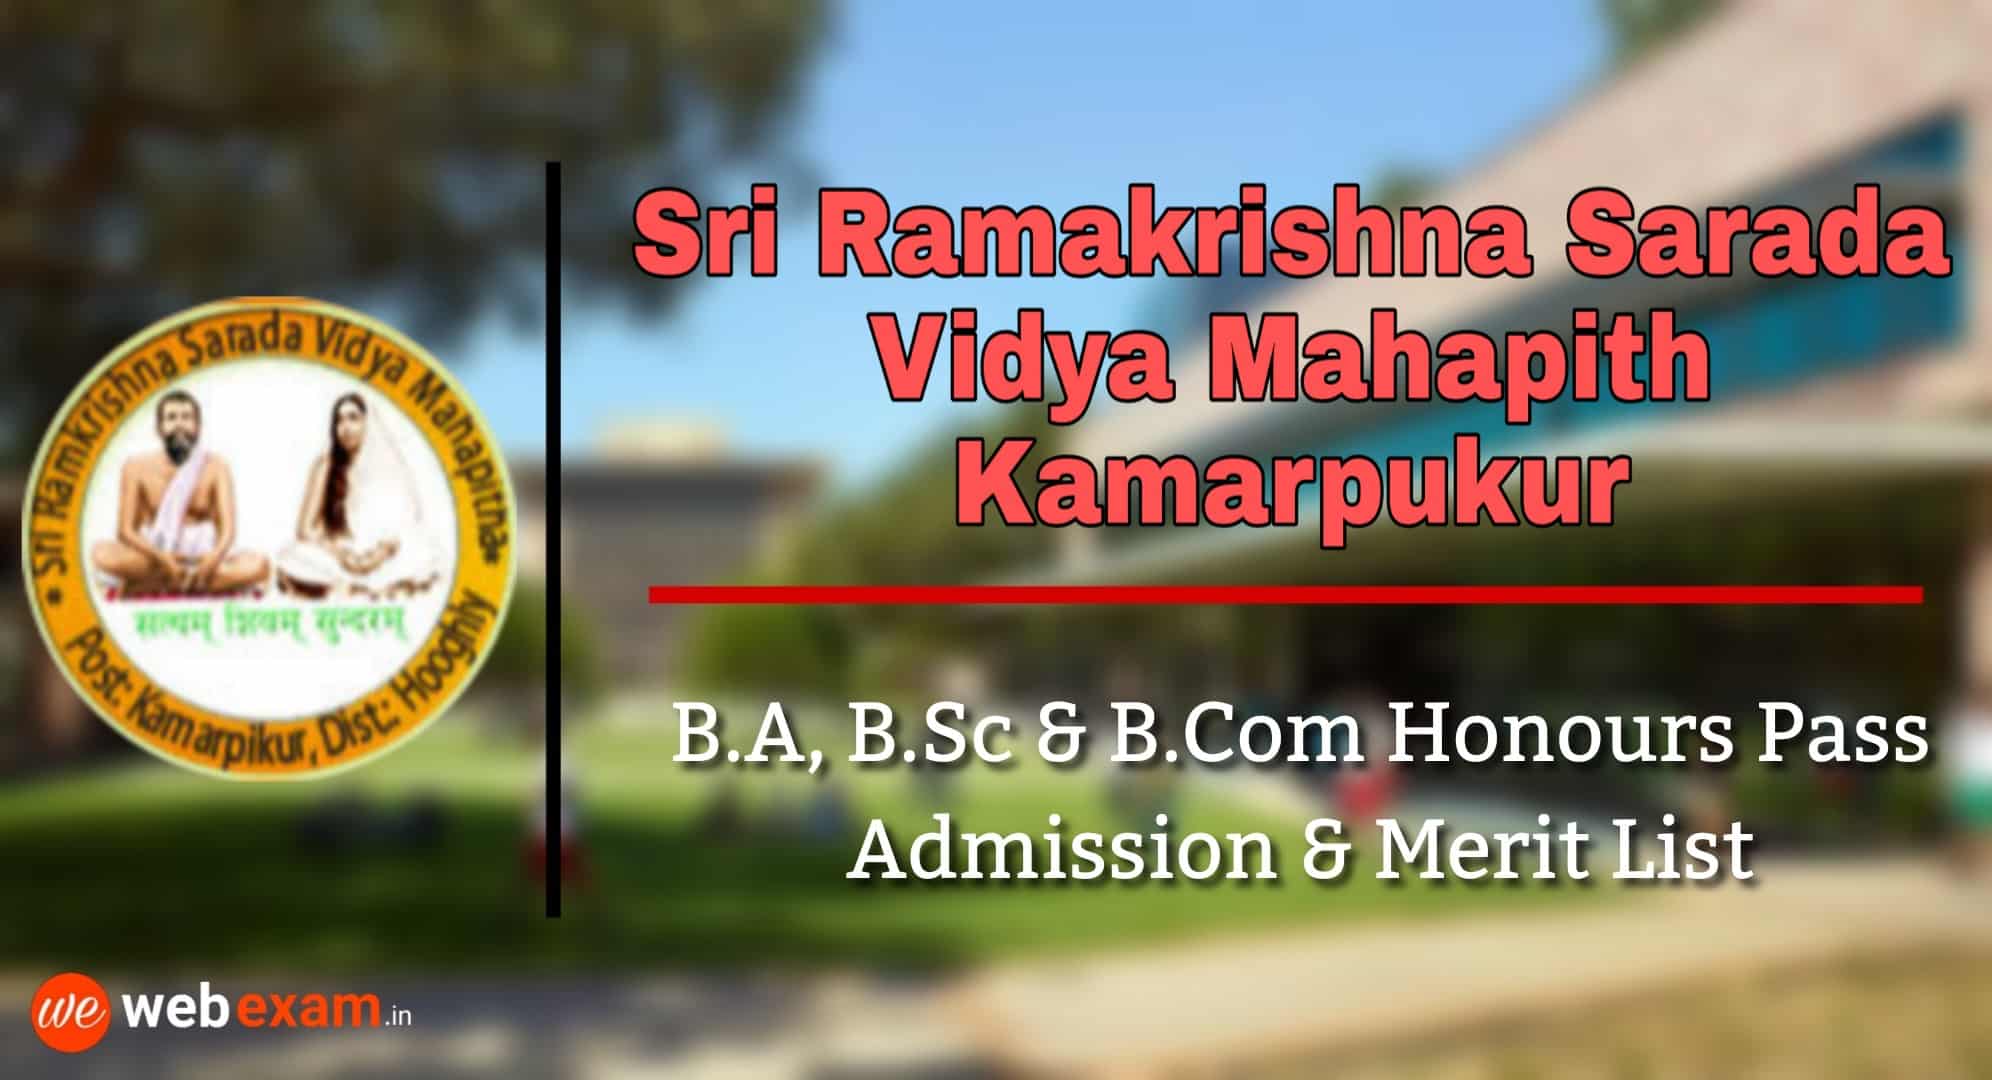 Sri Ramkrishna Sarada Vidya Mahapitha Kamrpukur College Admission